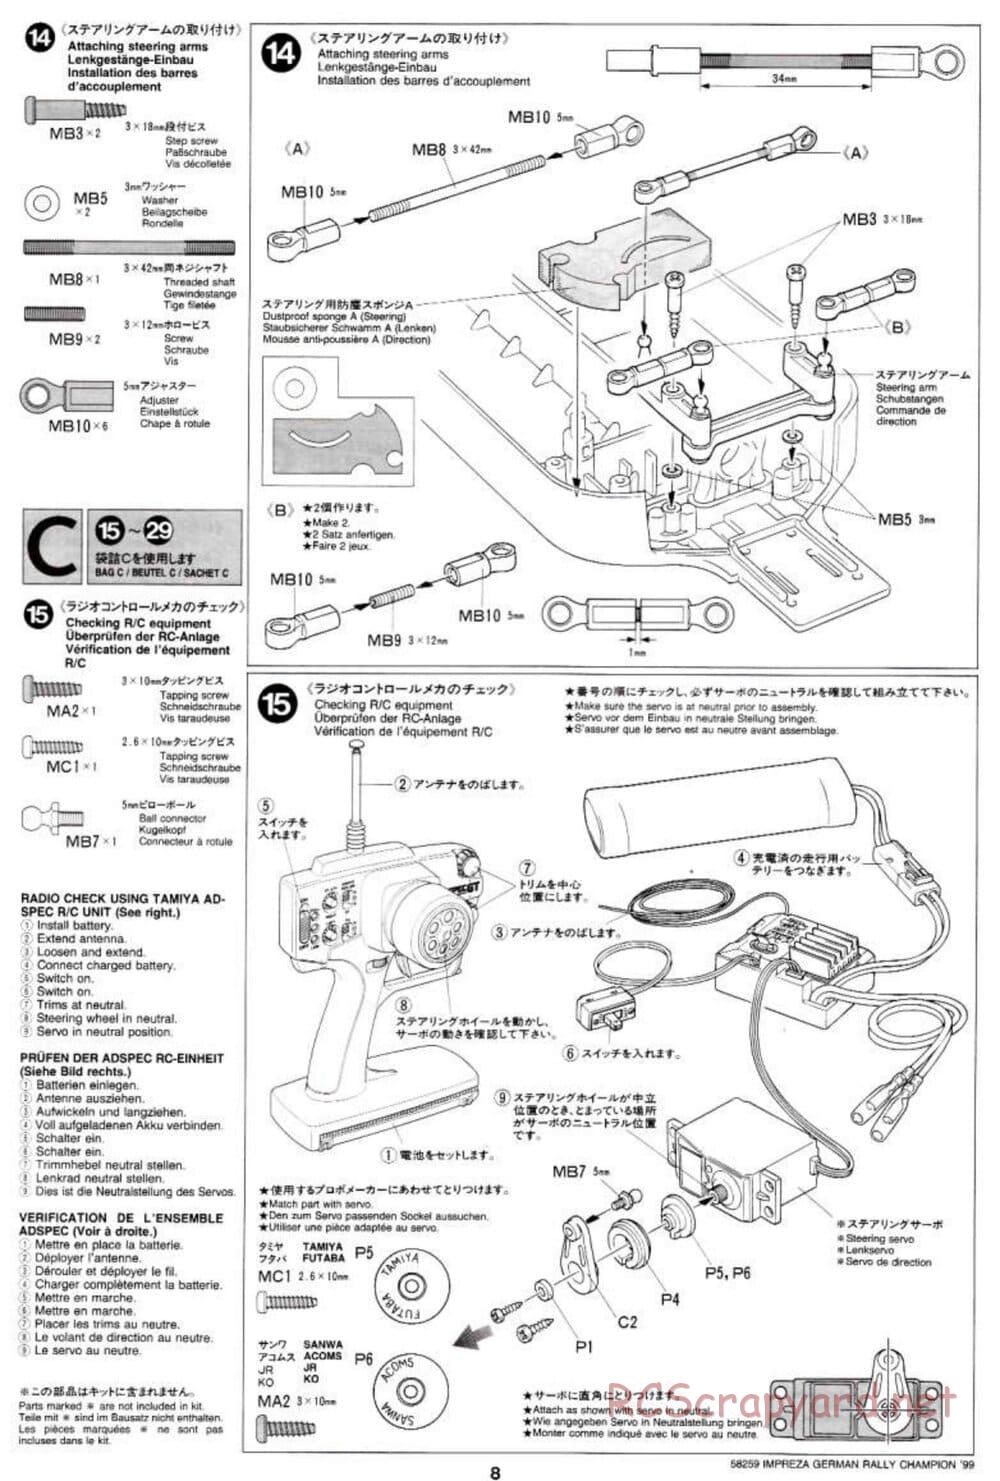 Tamiya - Subaru Impreza German Rally Champion 99 - TB-01 Chassis - Manual - Page 8